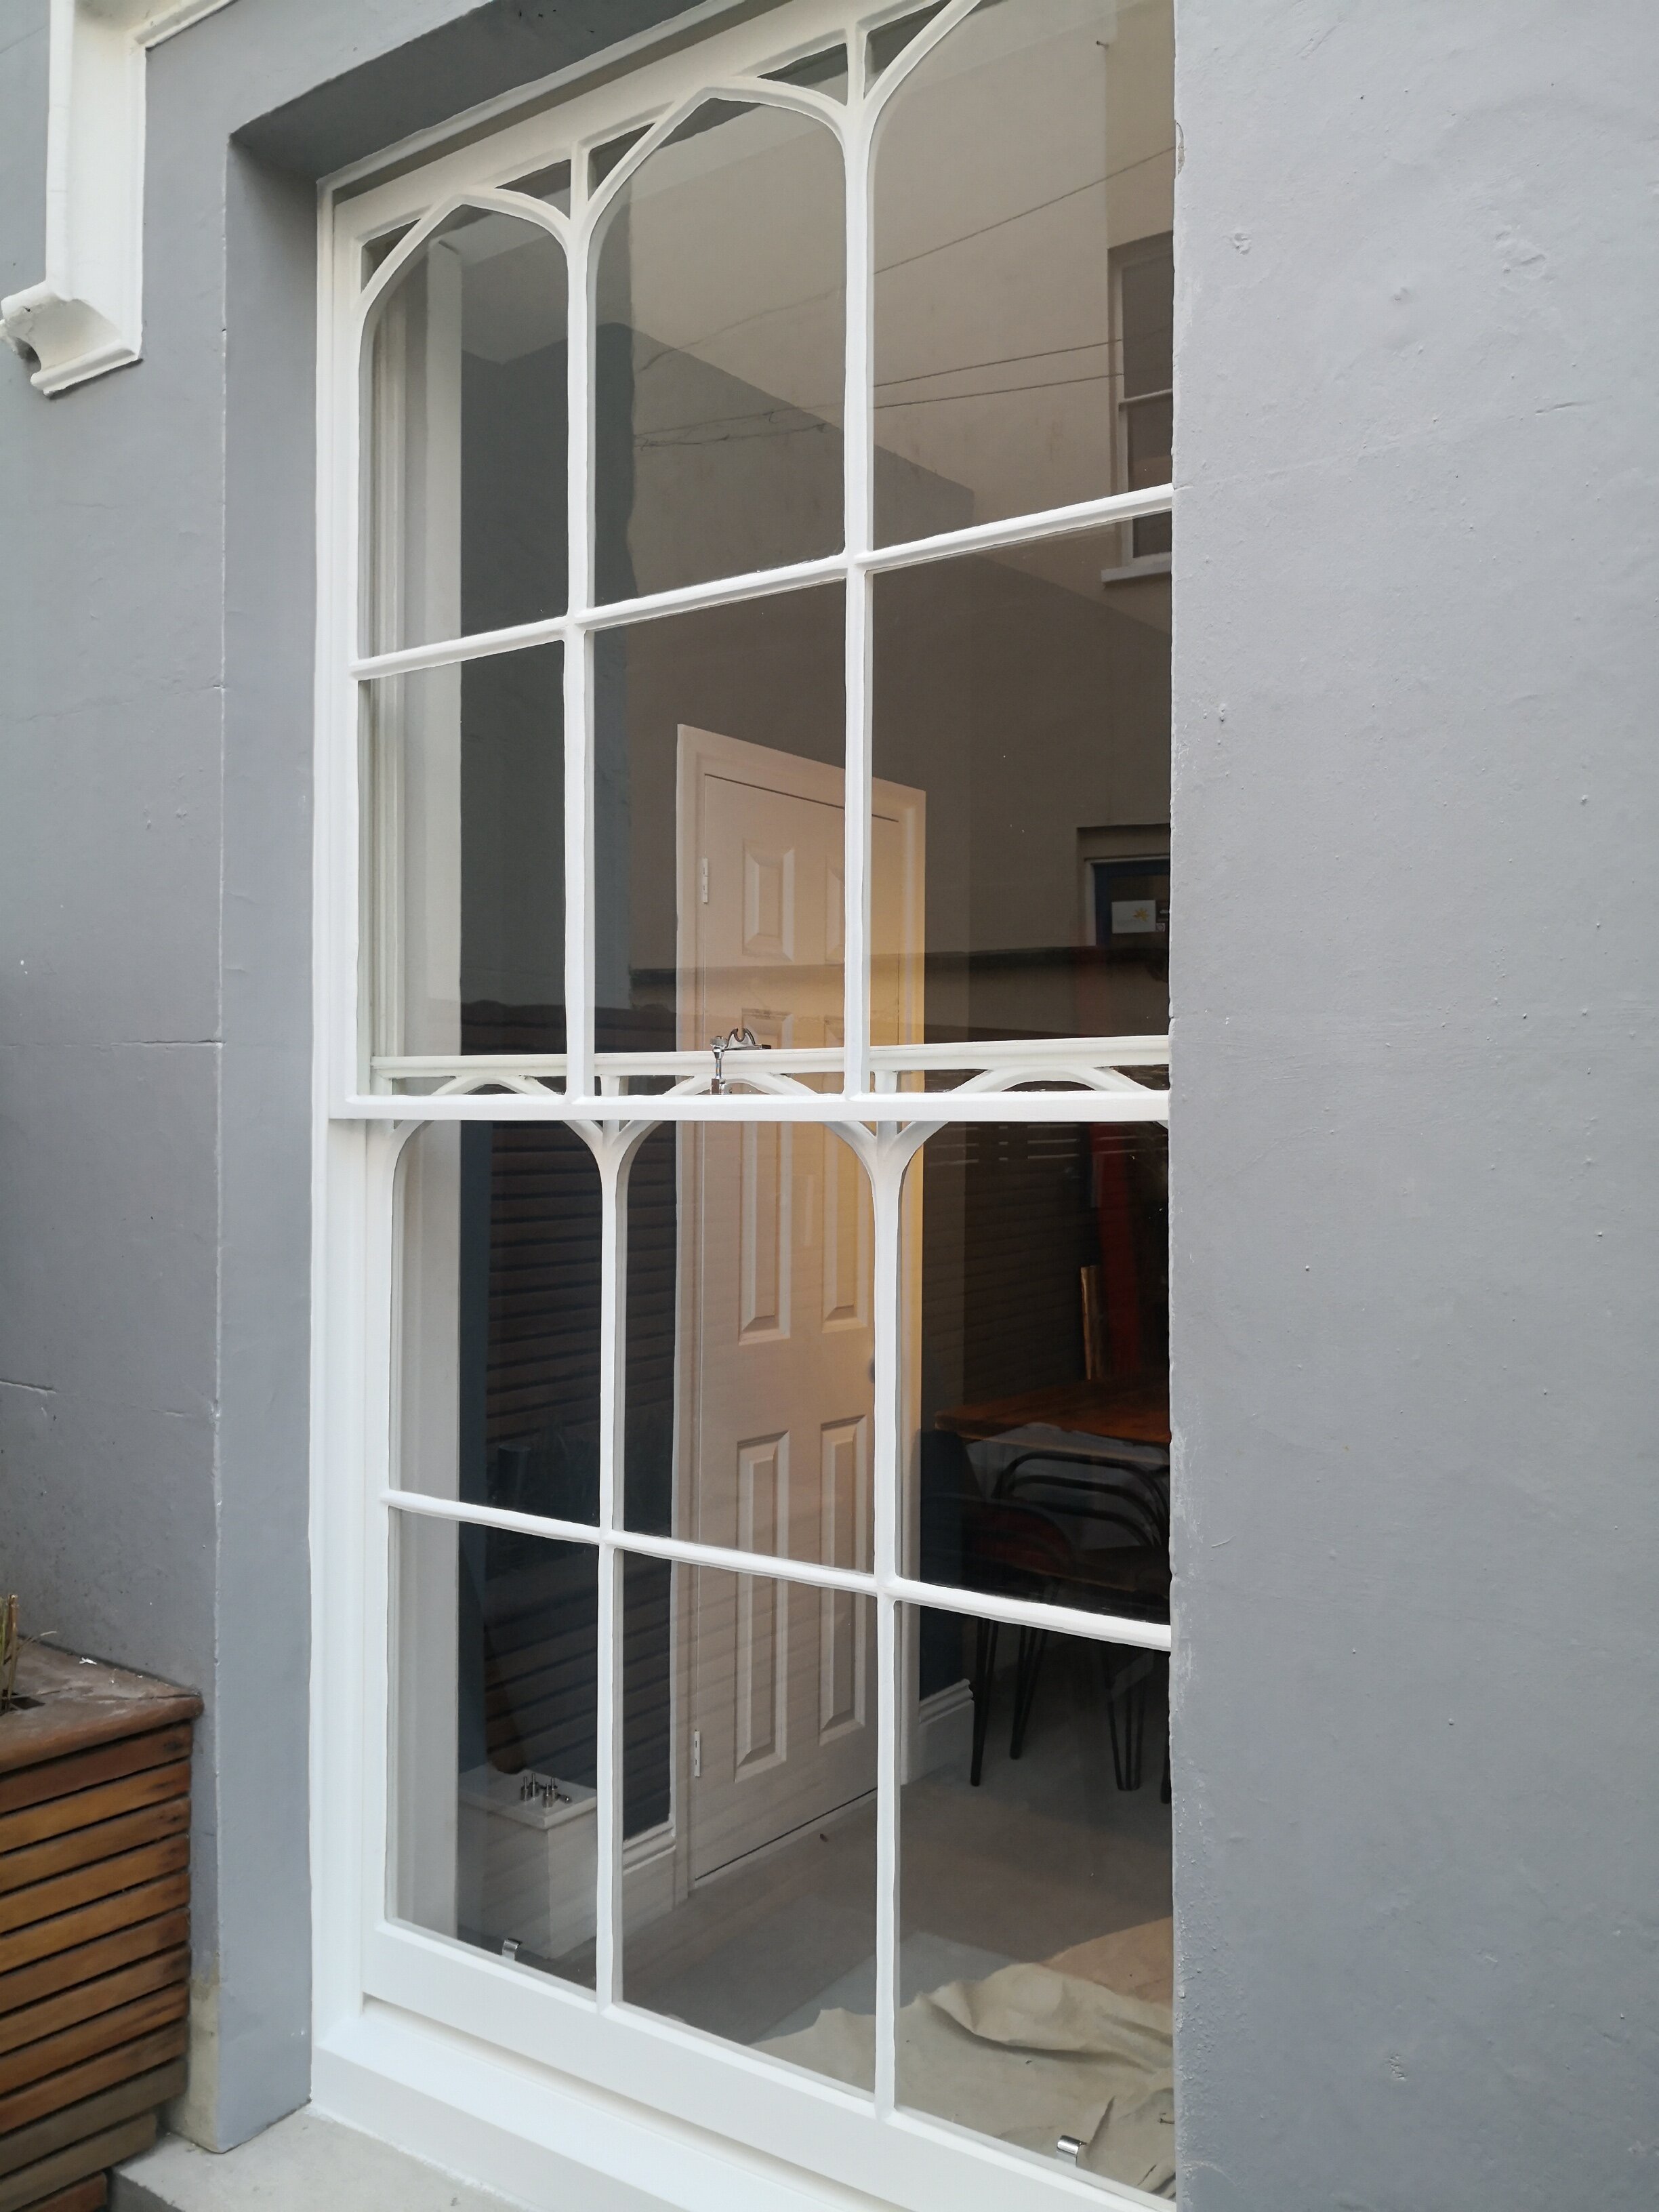 Renosash - The Sash Window Experts - Gloucestershire -sash window restoration and painting_12.jpg